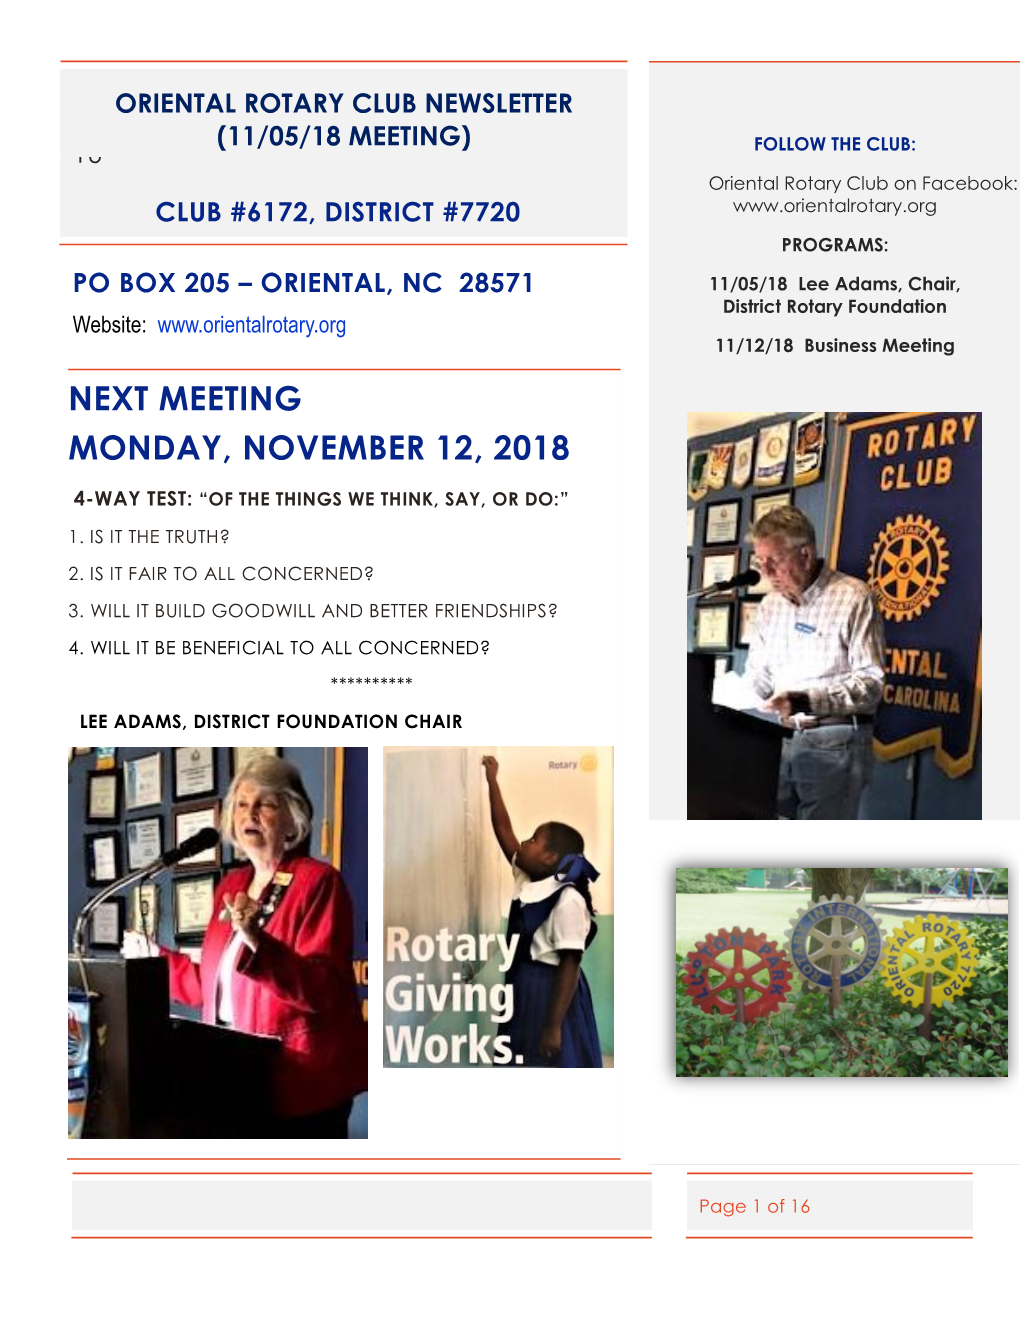 Next Meeting Monday, November 12, 2018